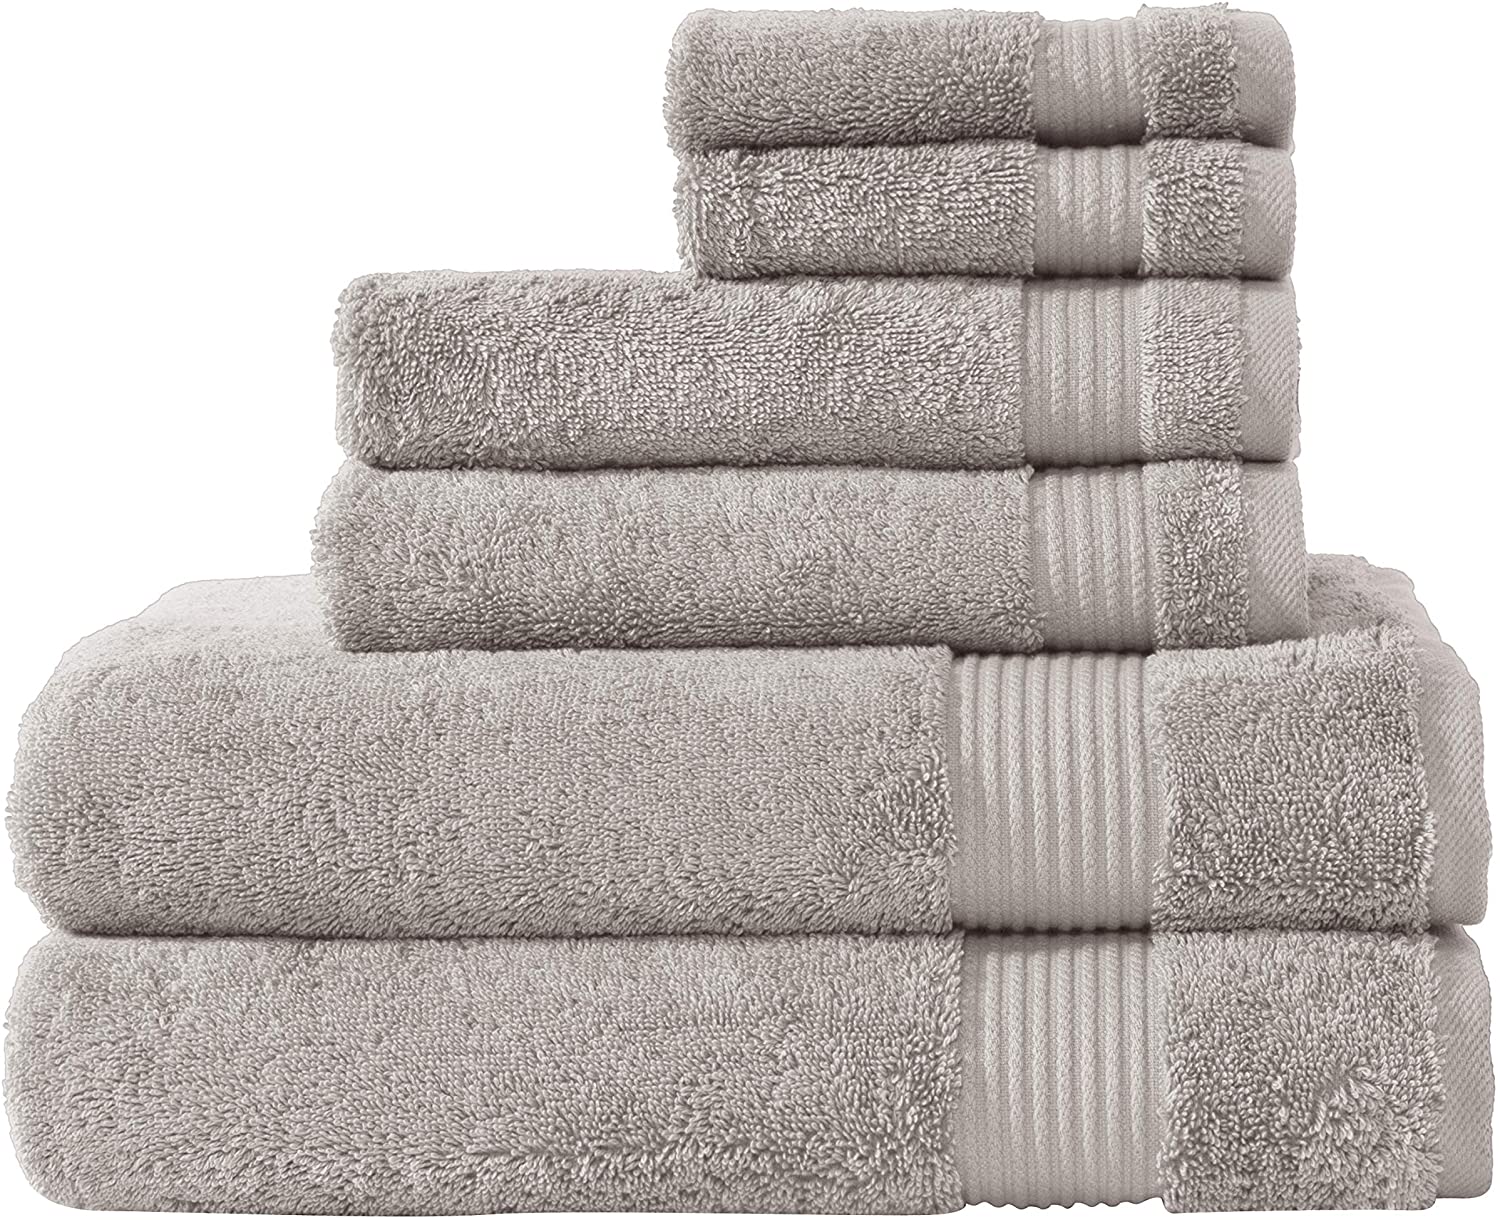 Classic Turkish Towels Amadeus Luxury Turkish Cotton Towel Collection Towel 6 Piece Set - image 2 of 3